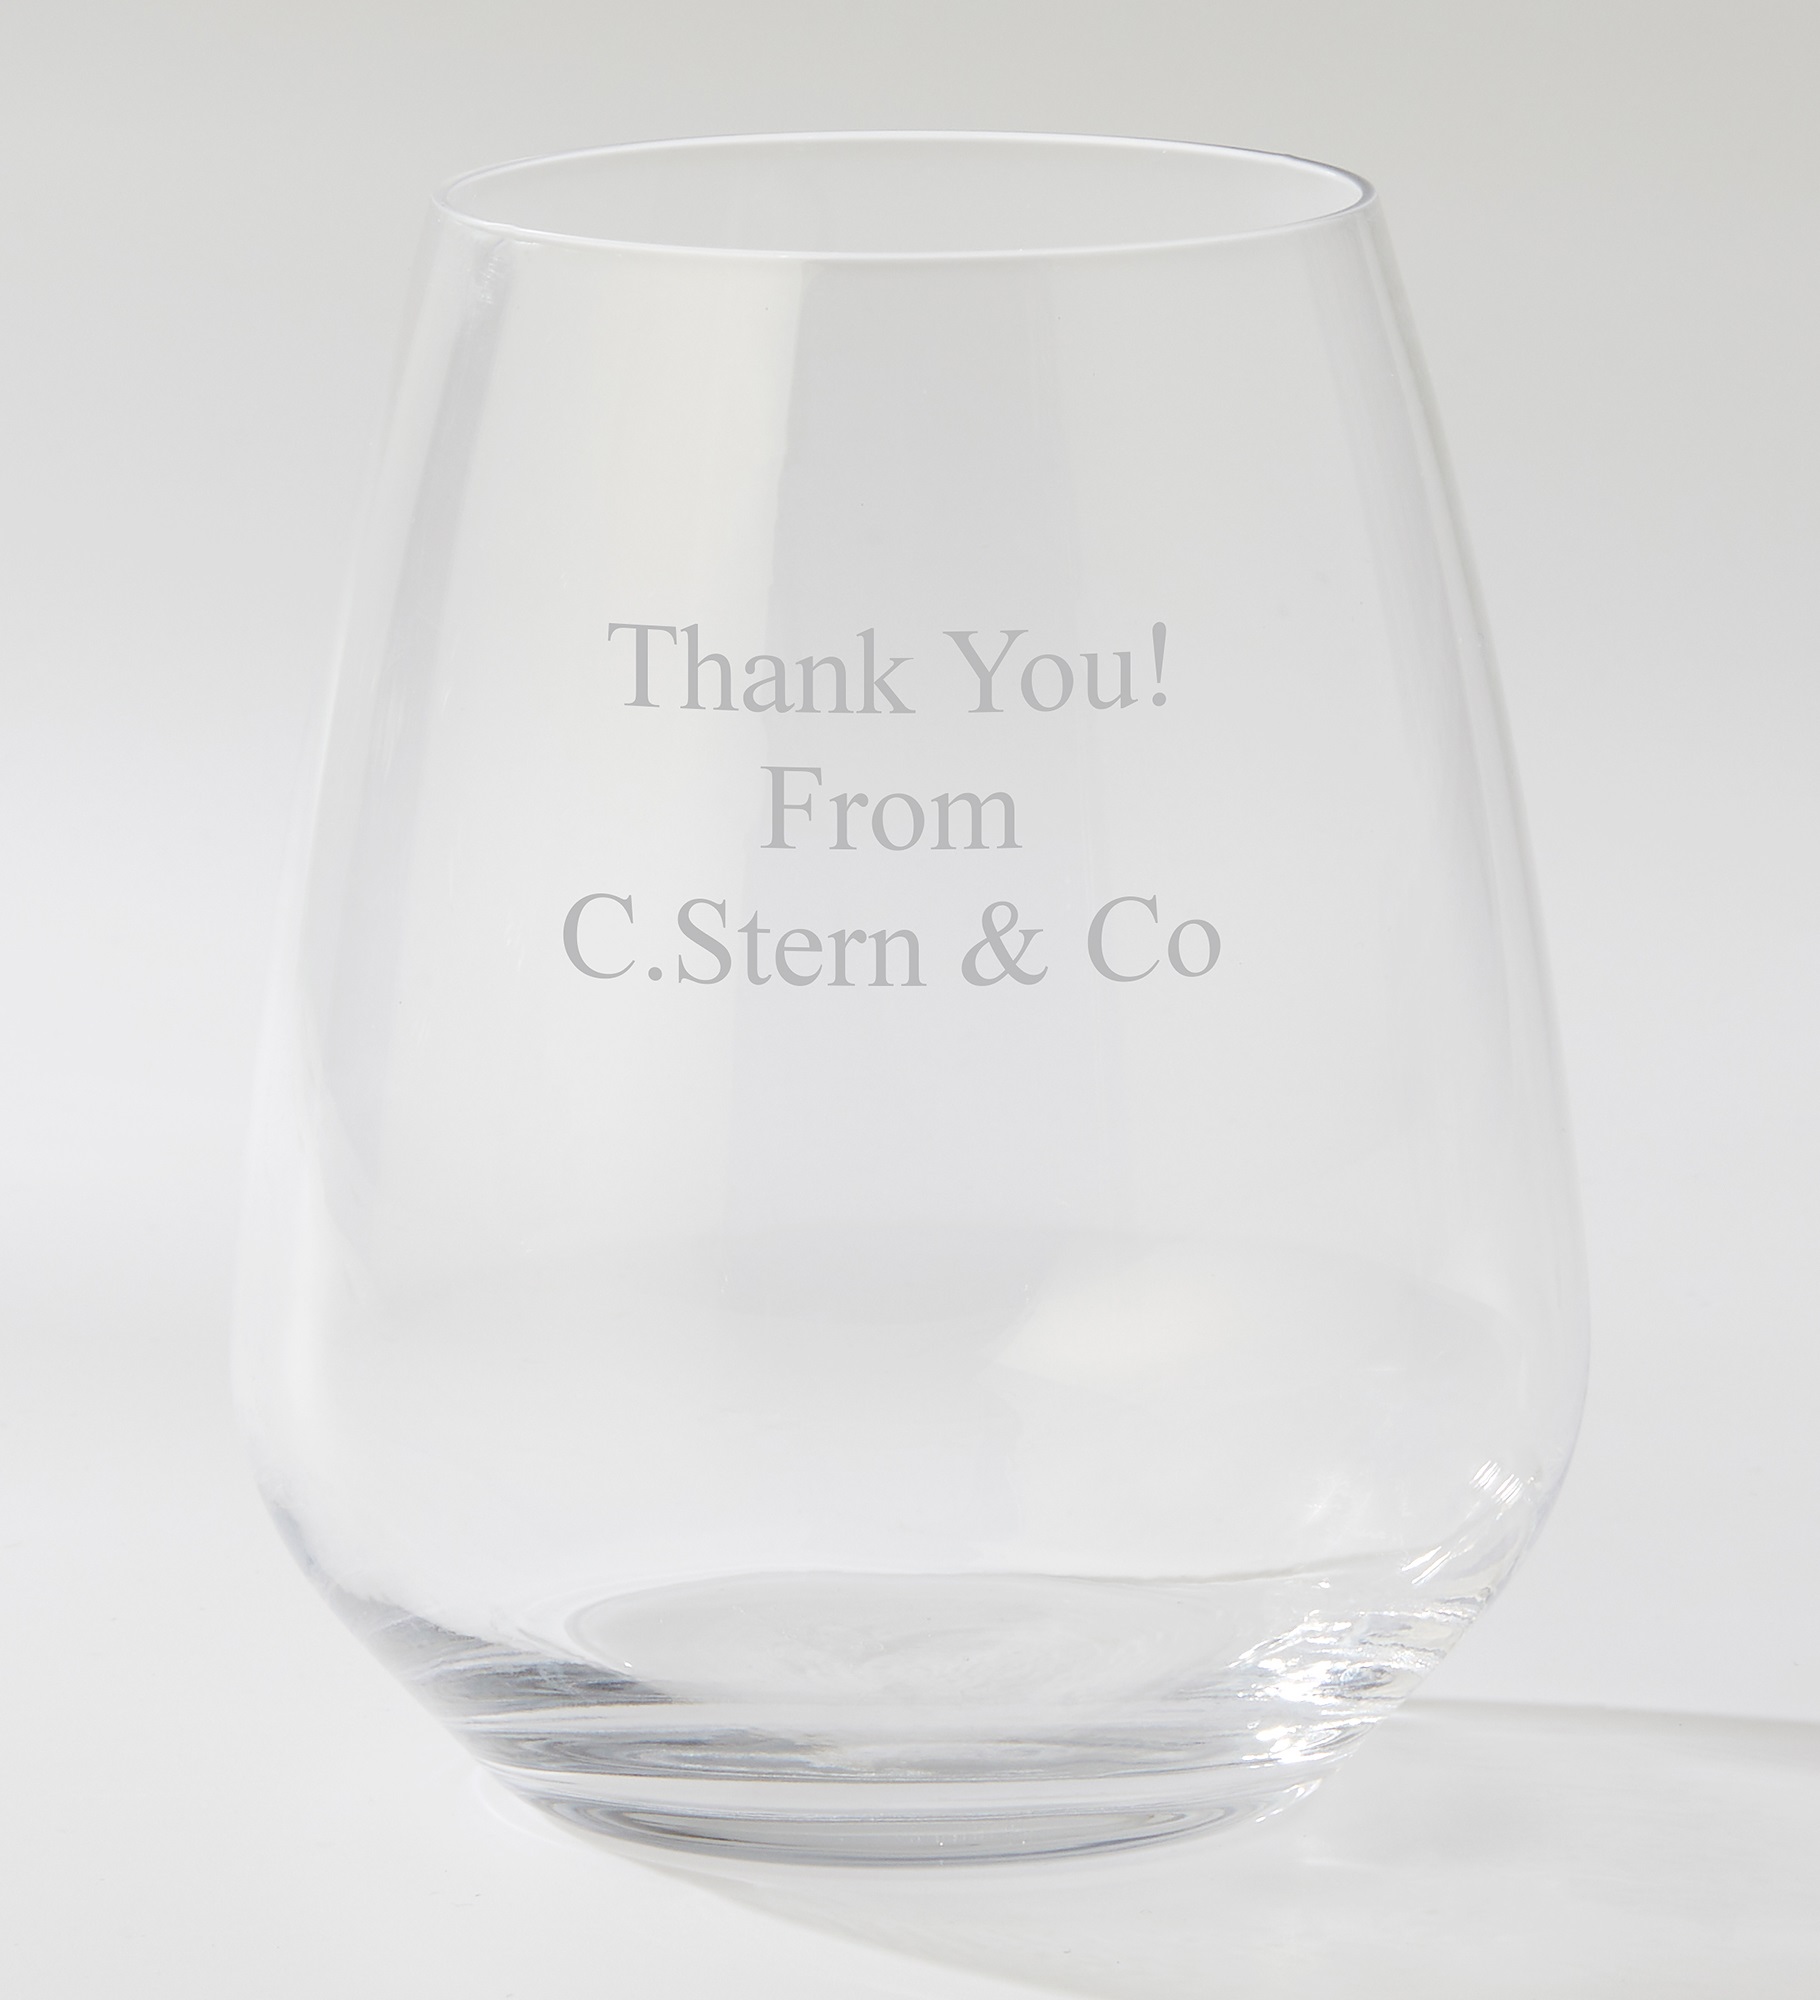  Engraved Luigi Bormioli Business Atelier Stemless Wine Glass